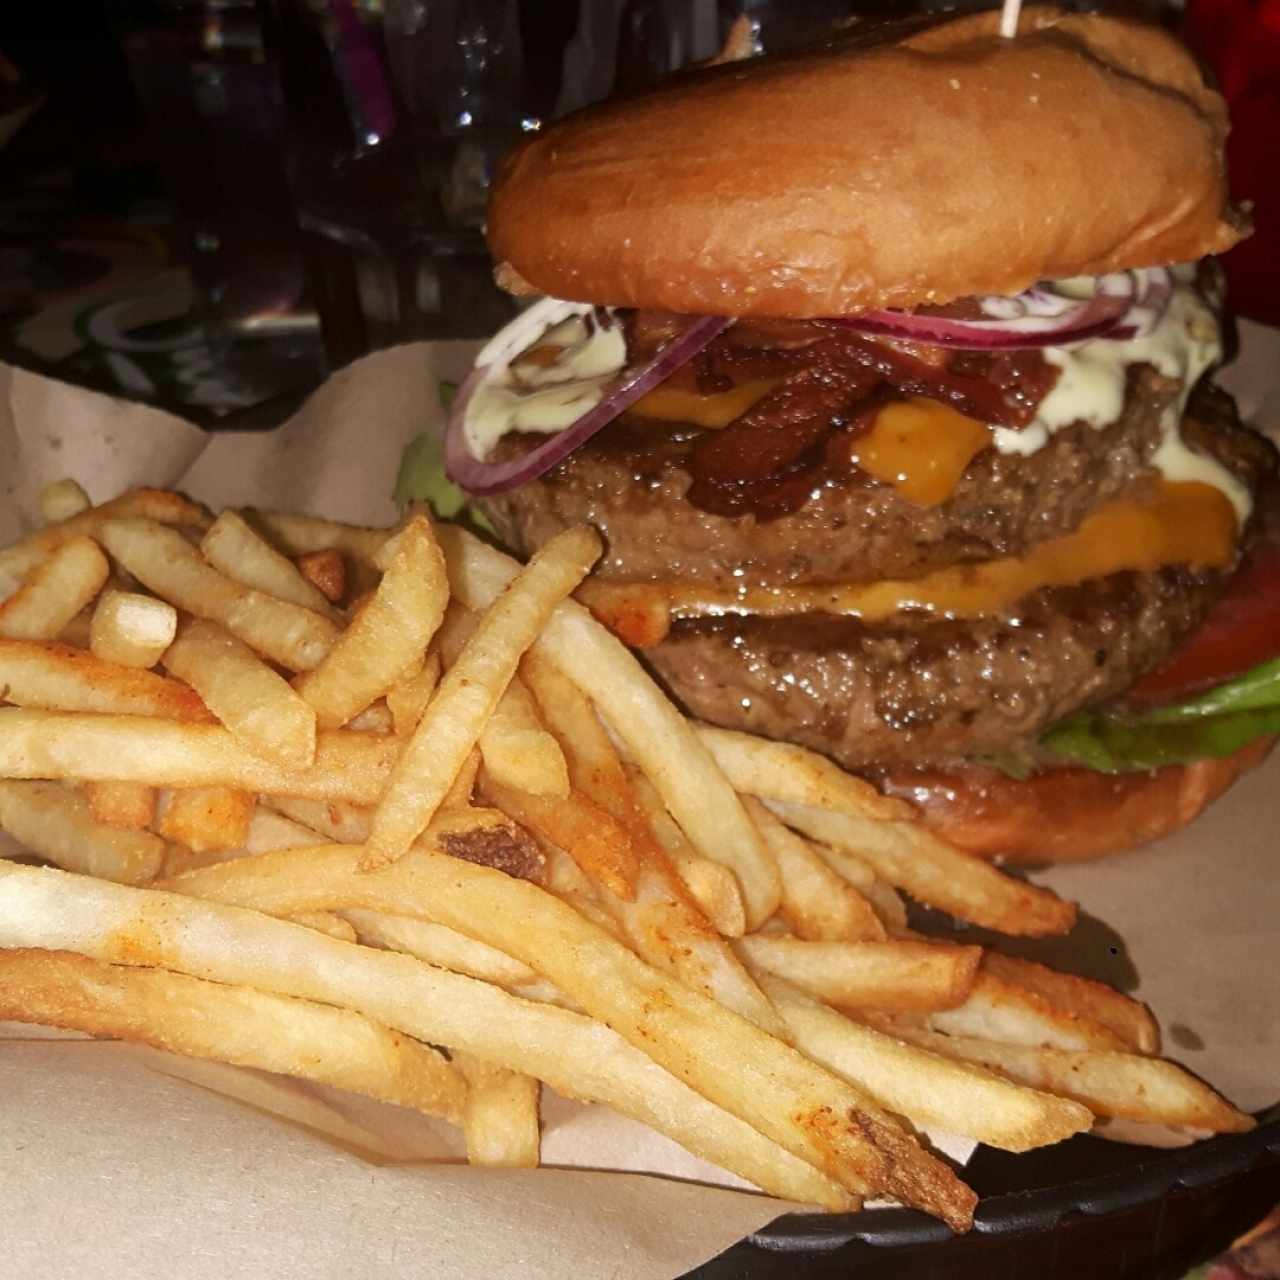 XXL burger 